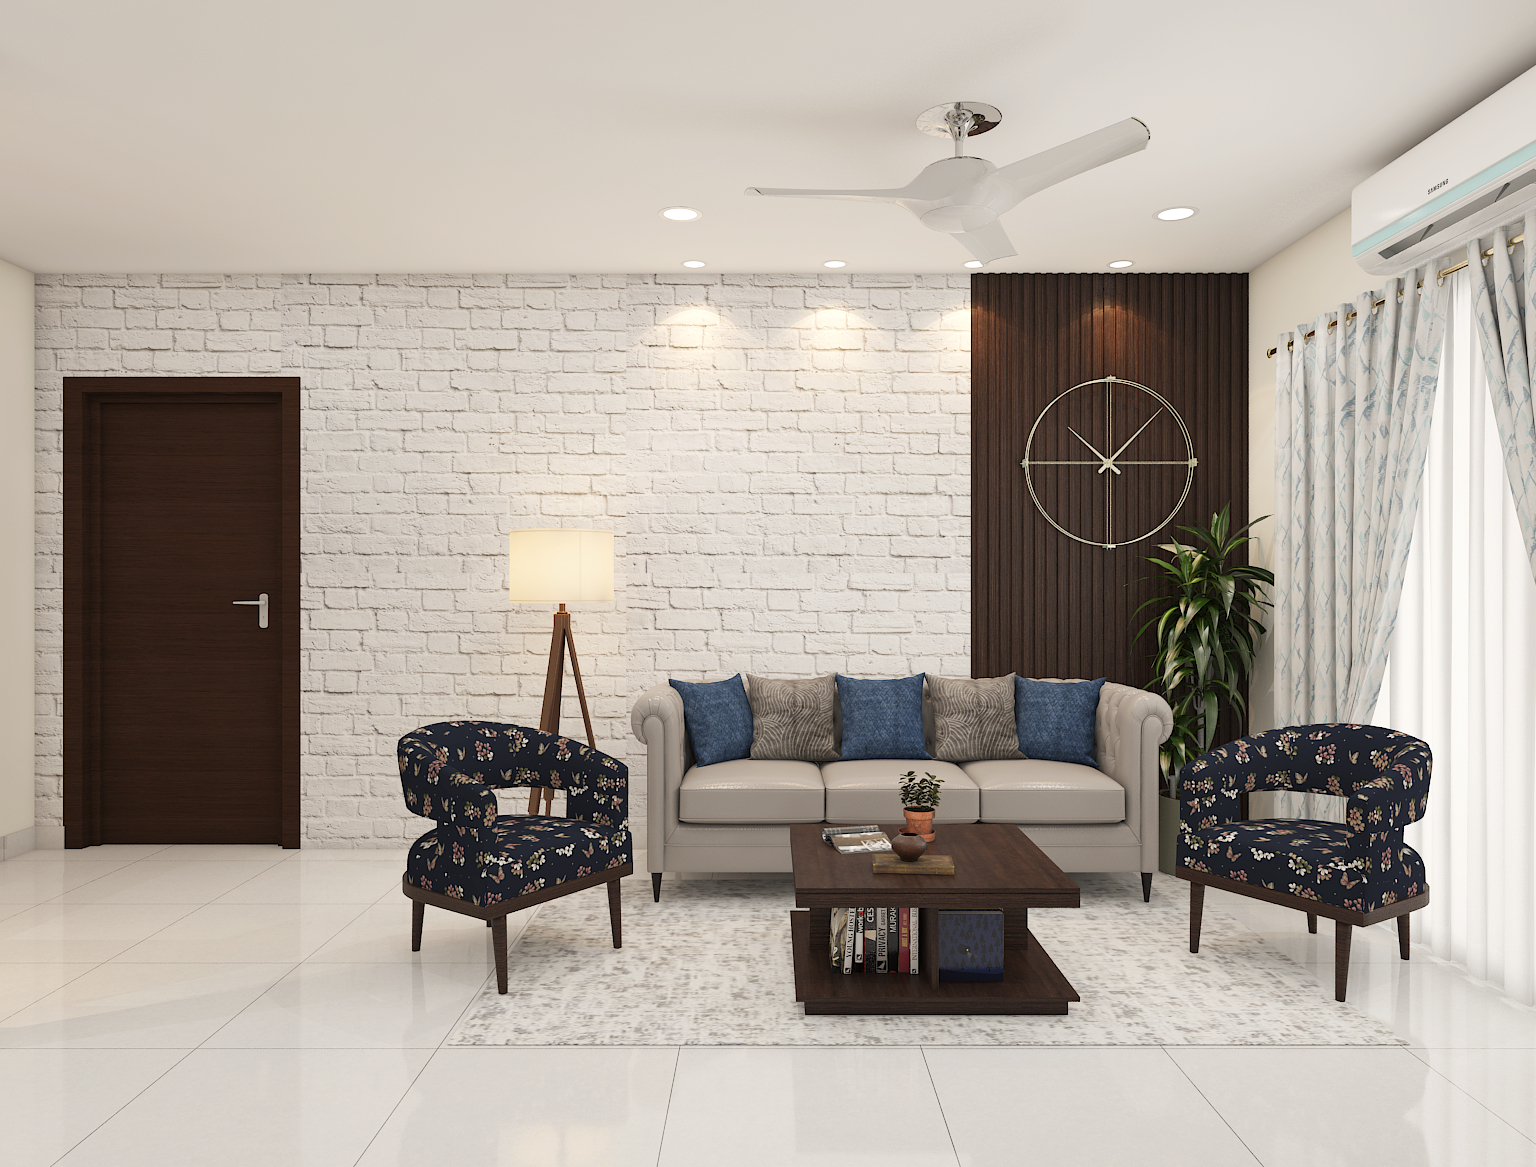 Interior Styles of Living Room